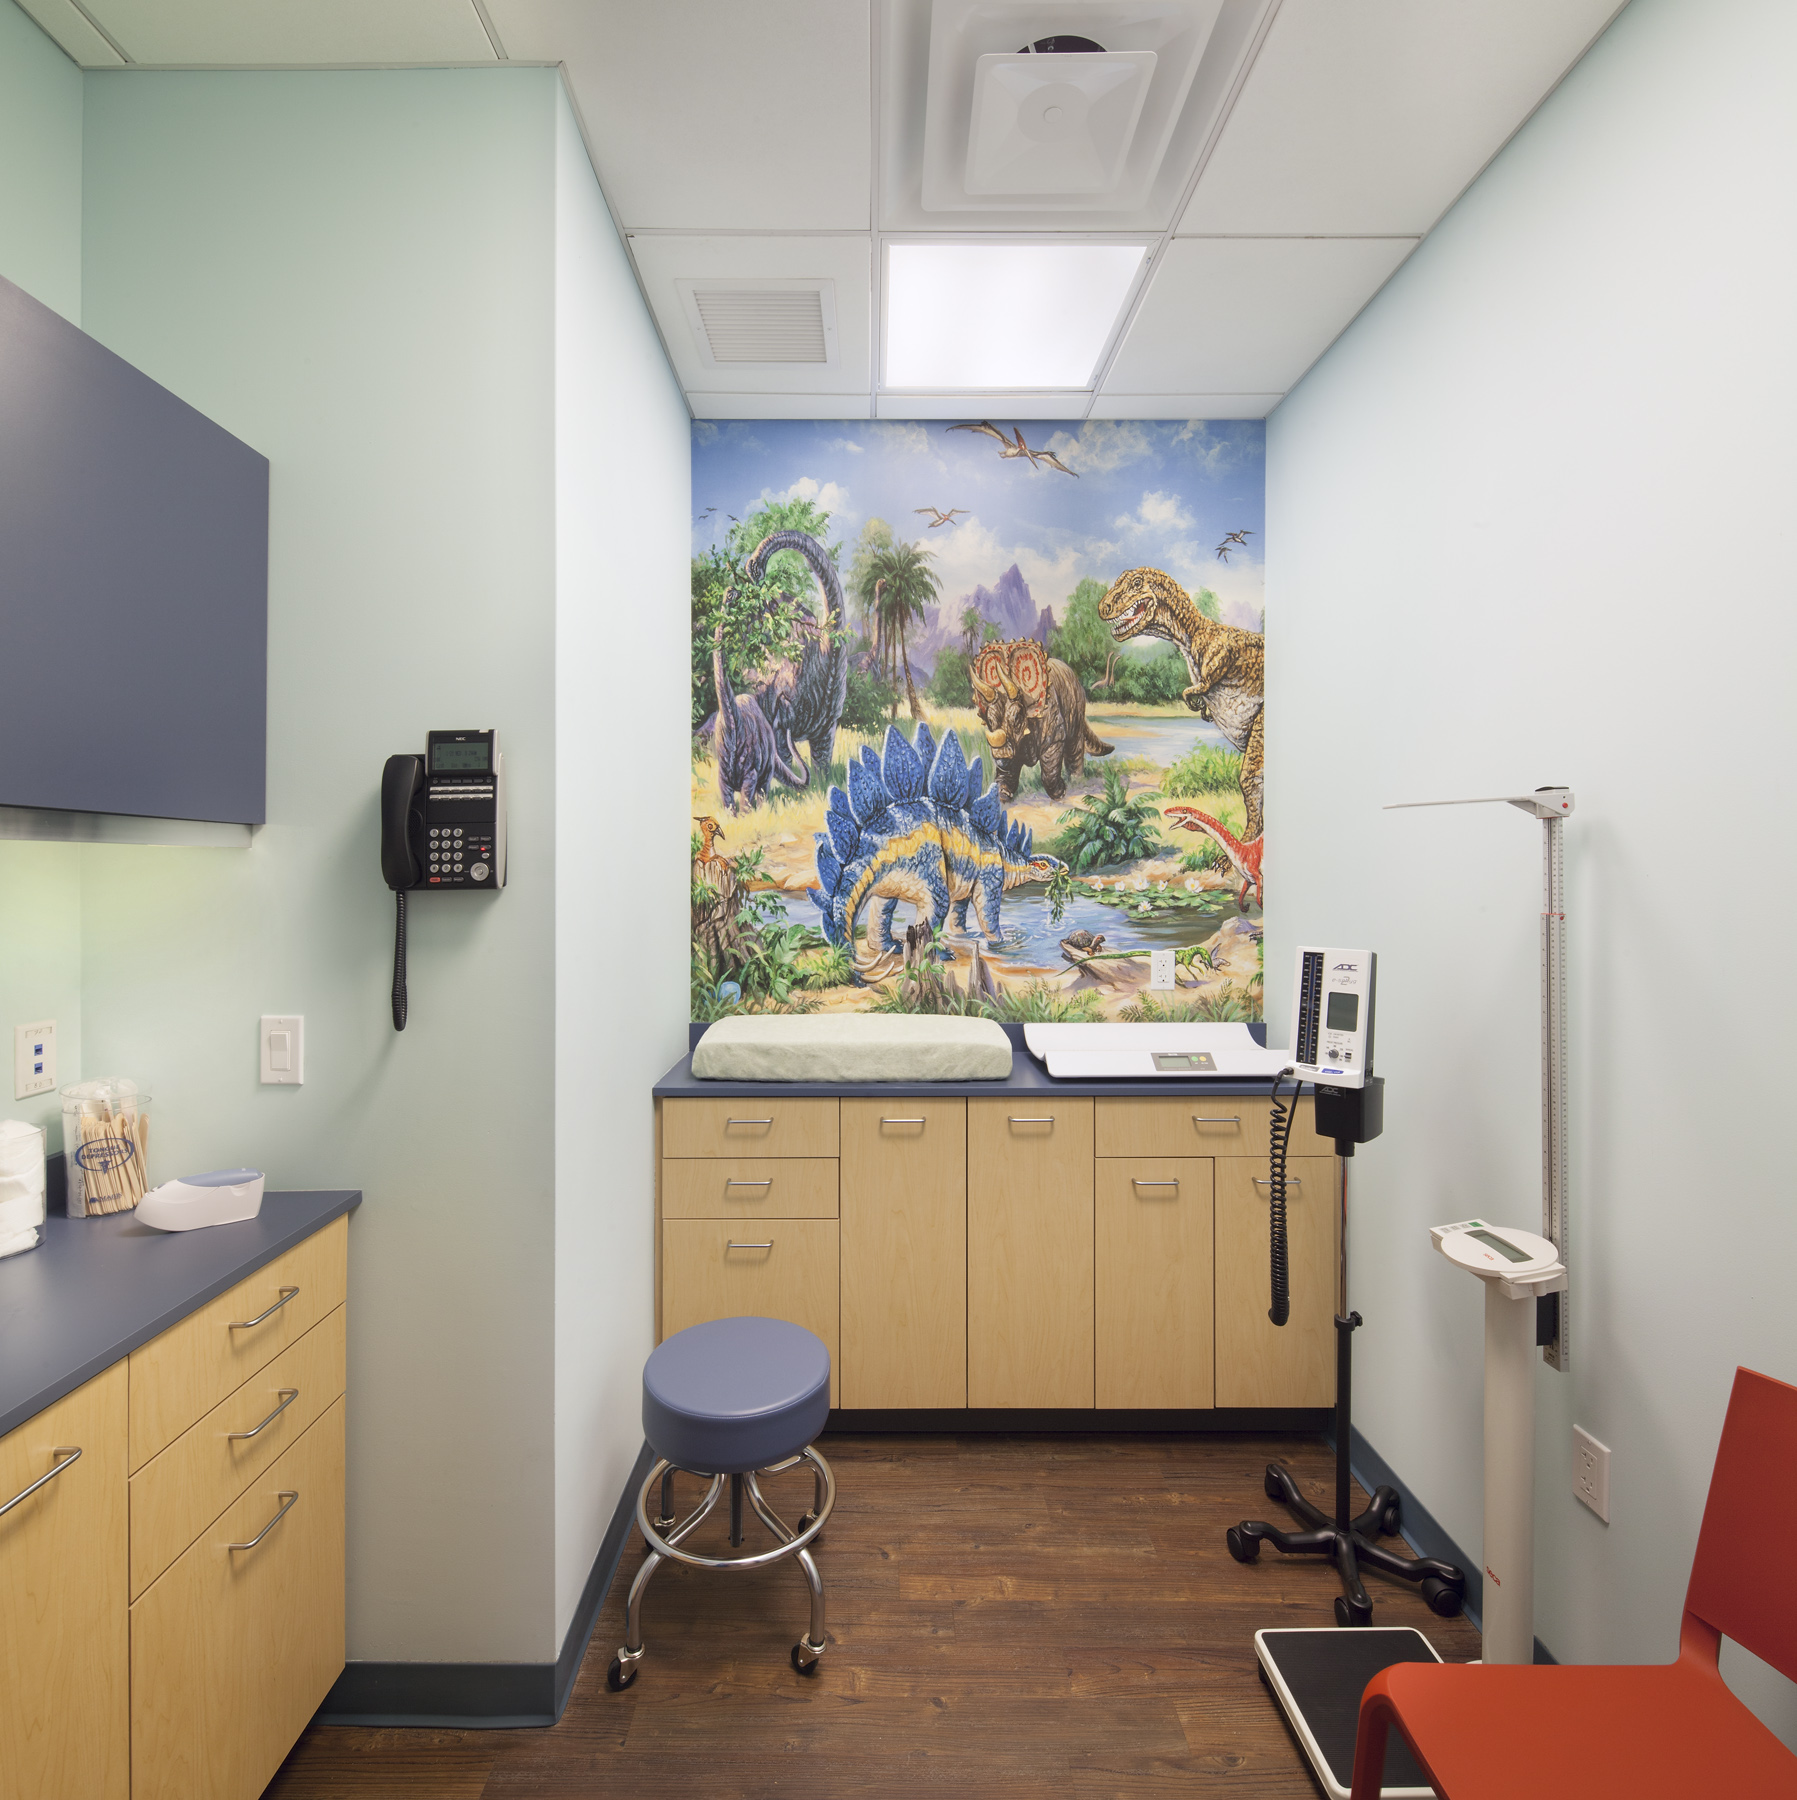 Flatiron Pediatrics. Tobin Parnes Design. NYC. Healthcare Design. Exam Room.